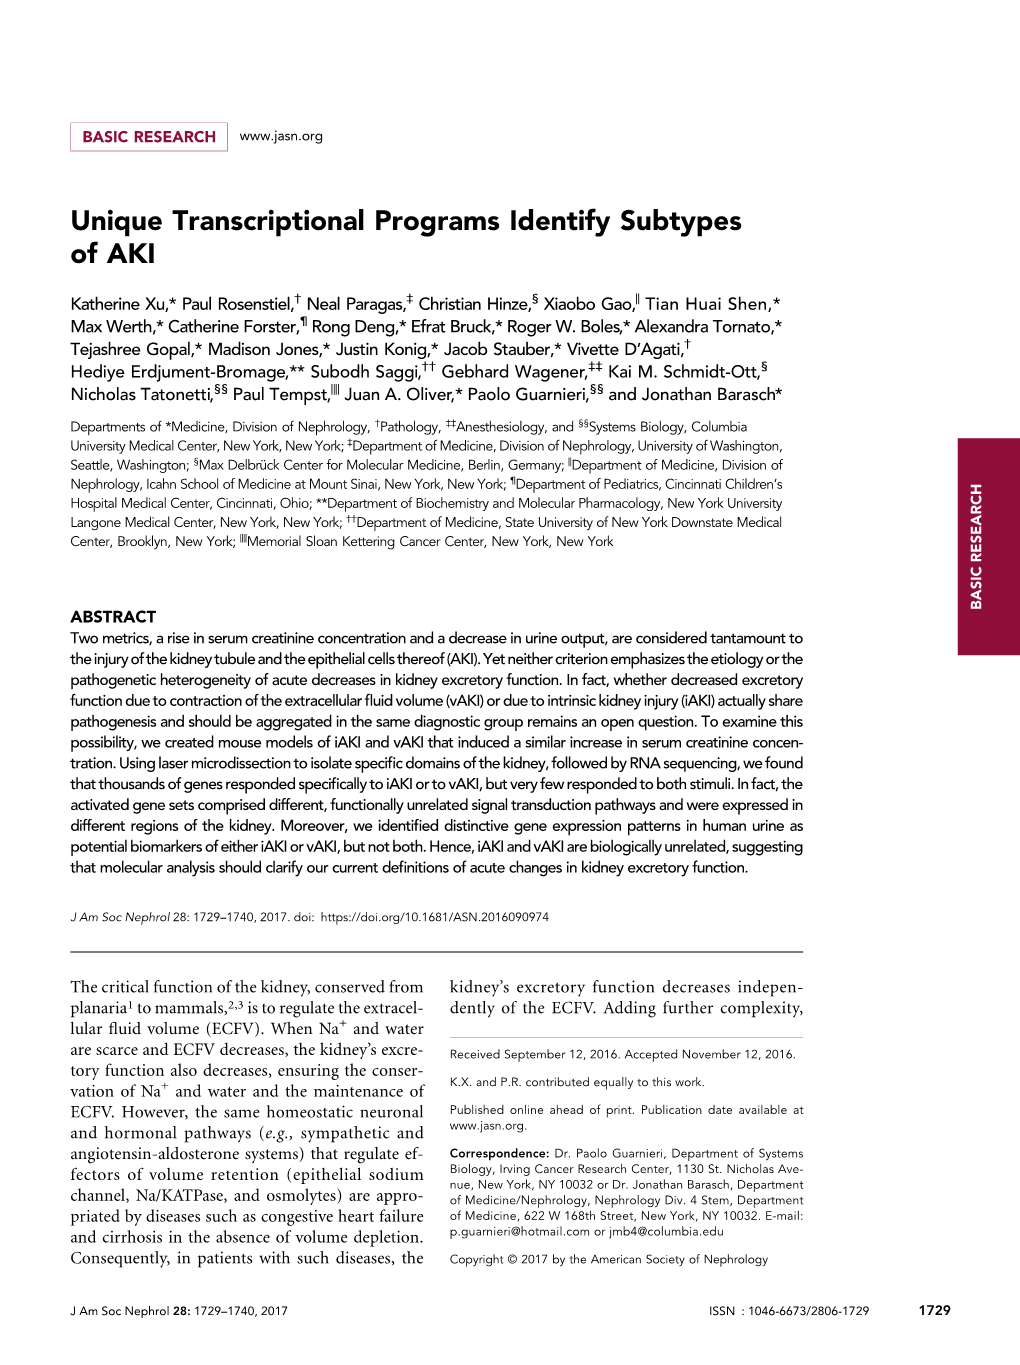 Unique Transcriptional Programs Identify Subtypes of AKI